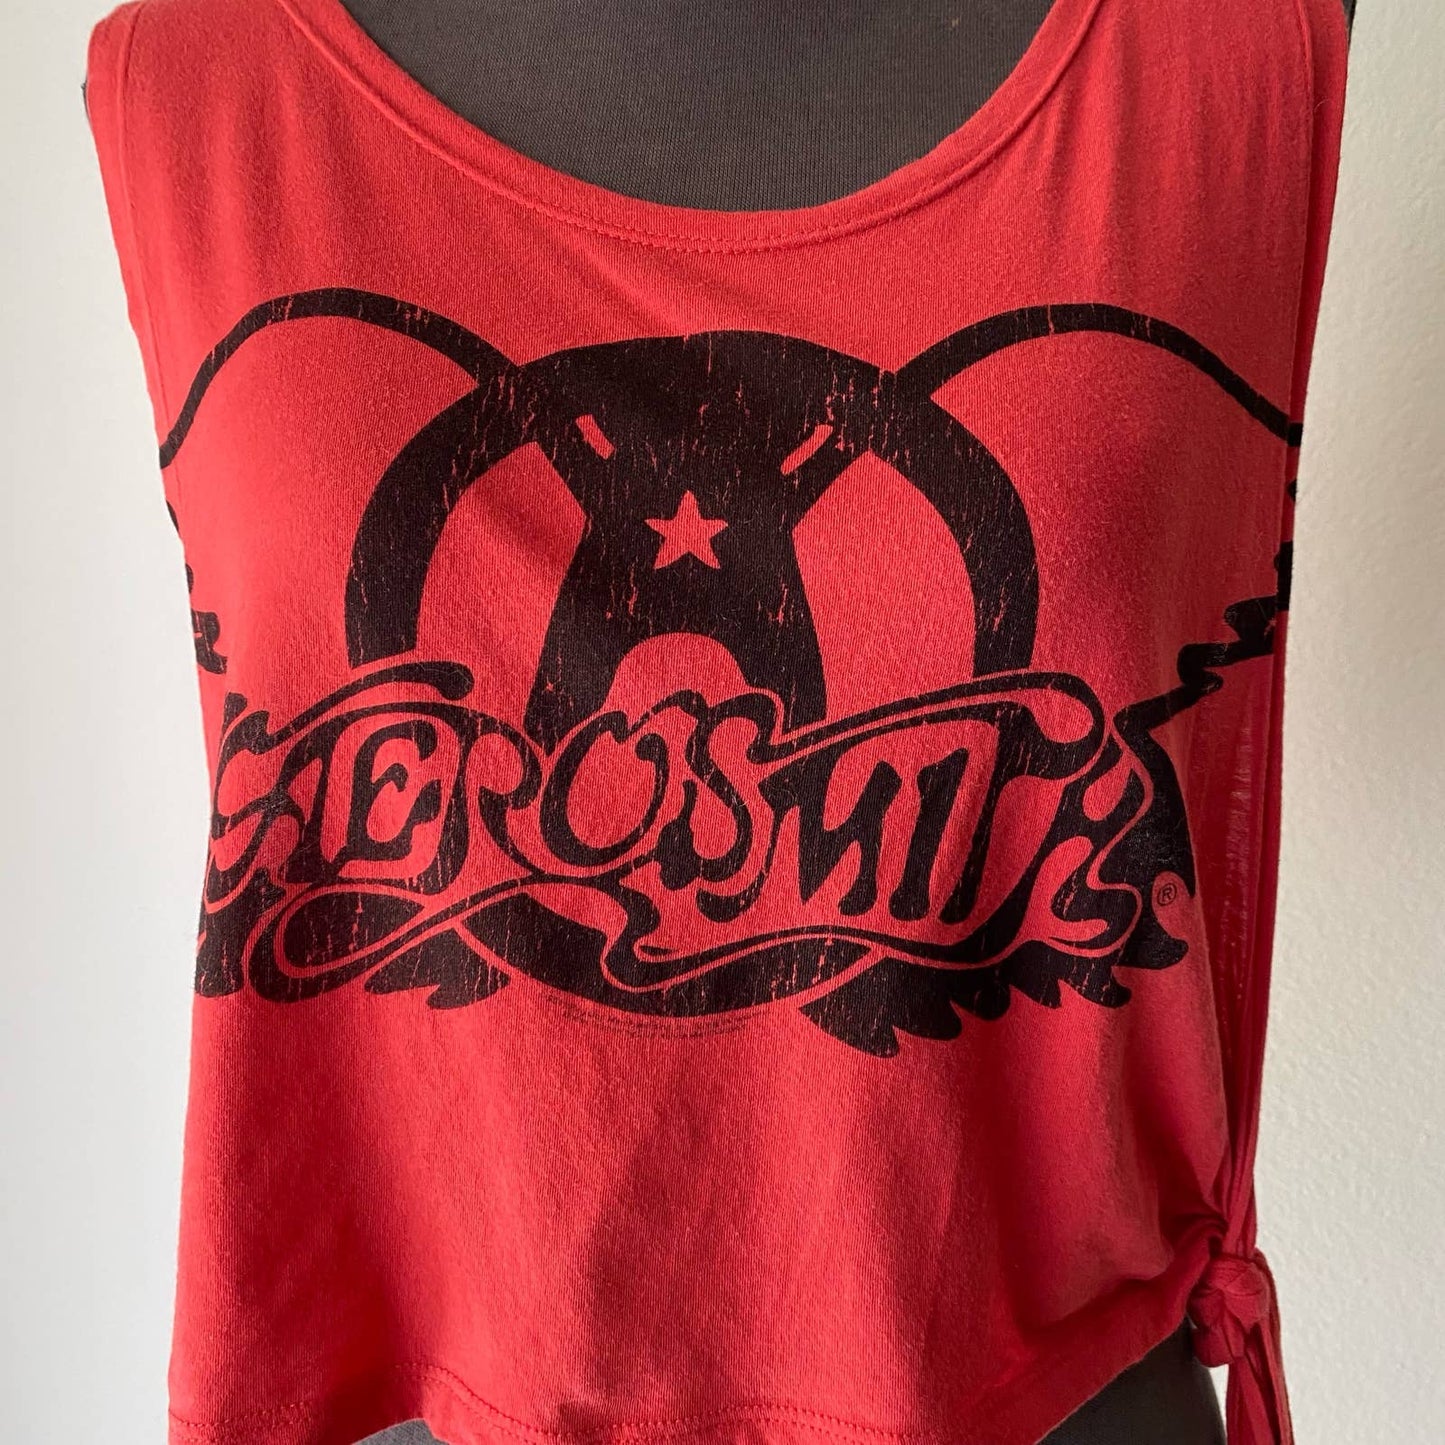 Aerosmith sz S red tank crop top